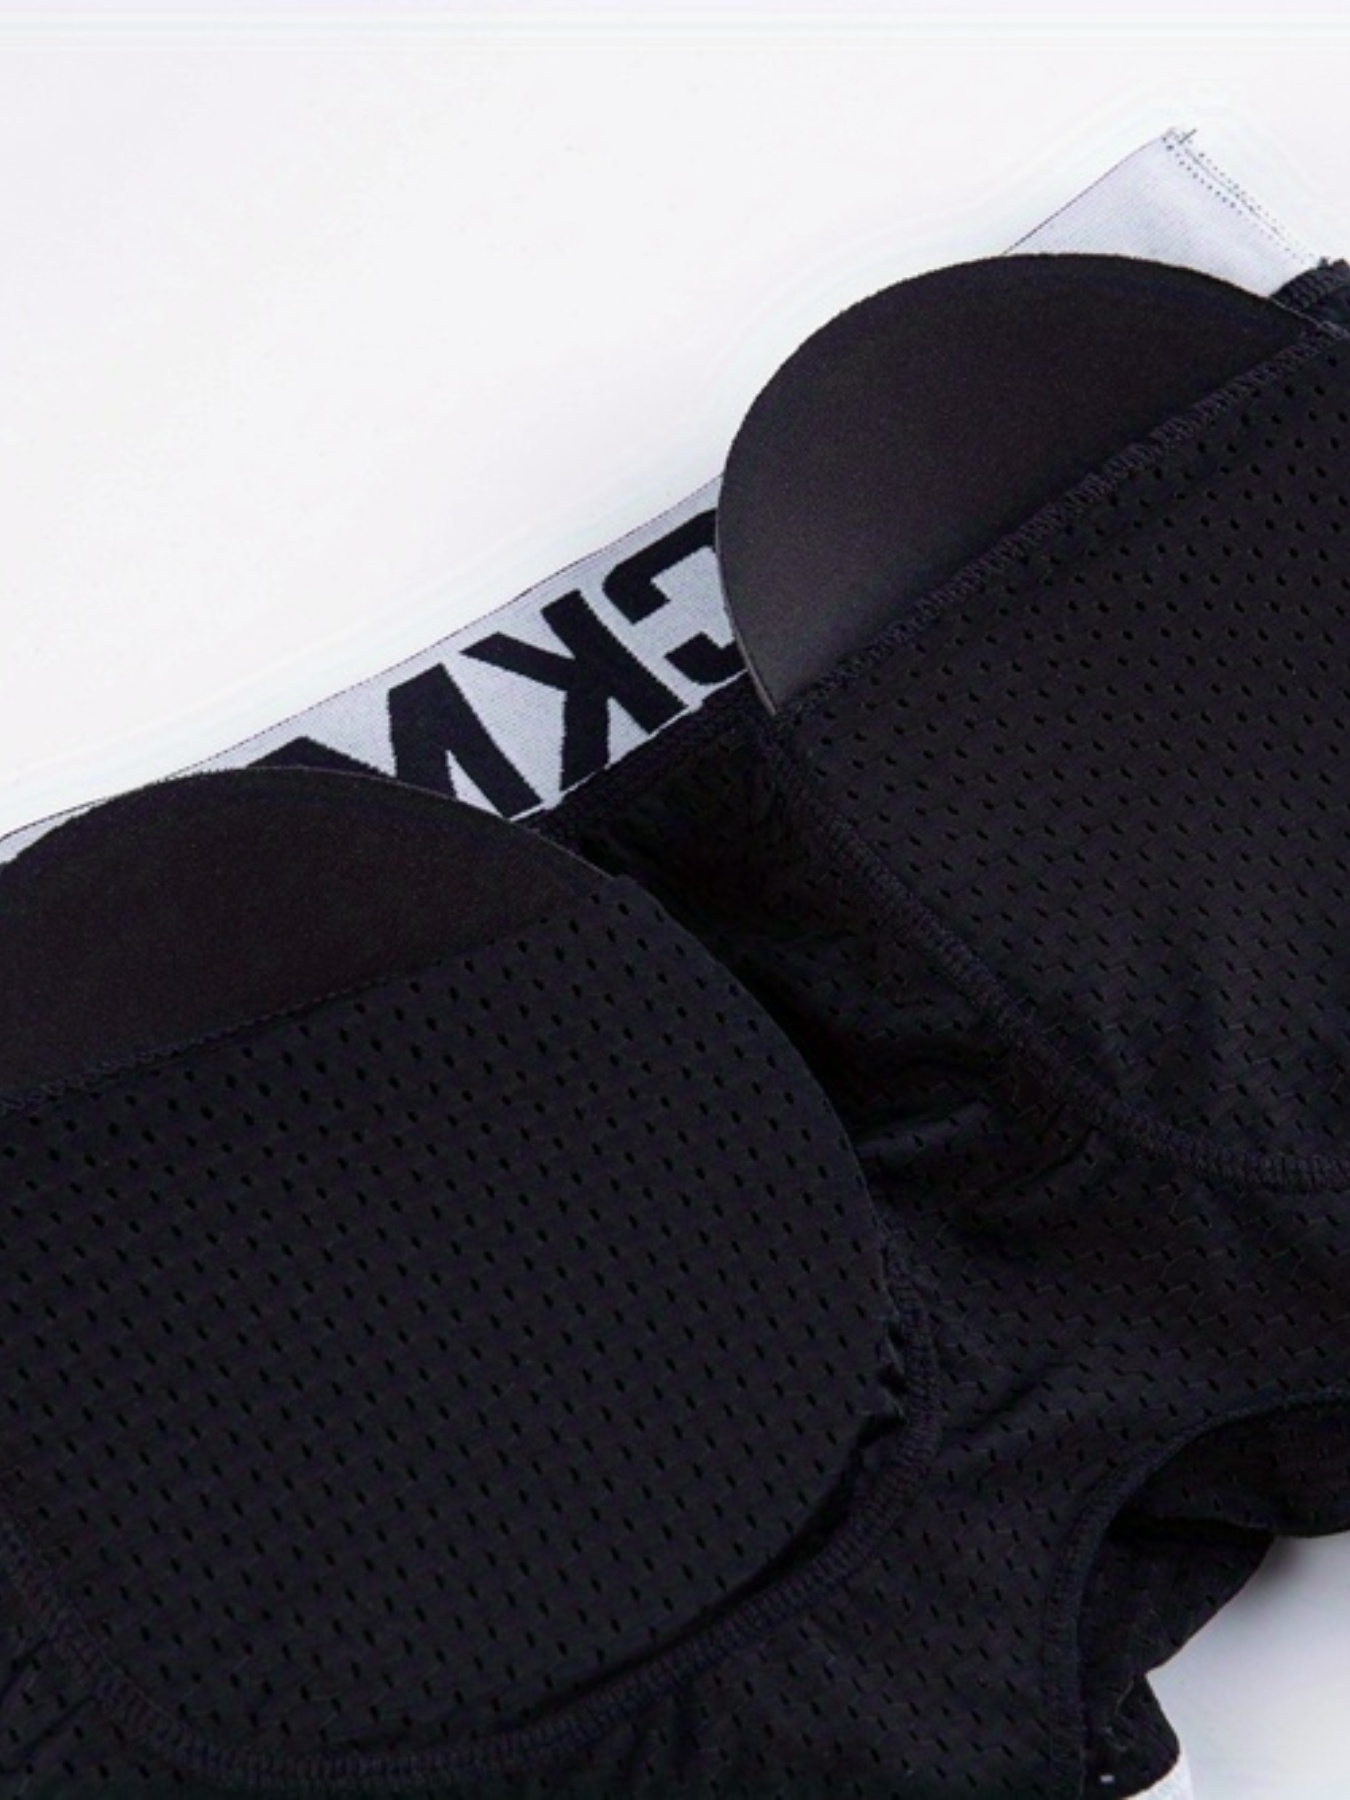 Calvin Klein CK One Mesh sheer long leg boxer brief in black